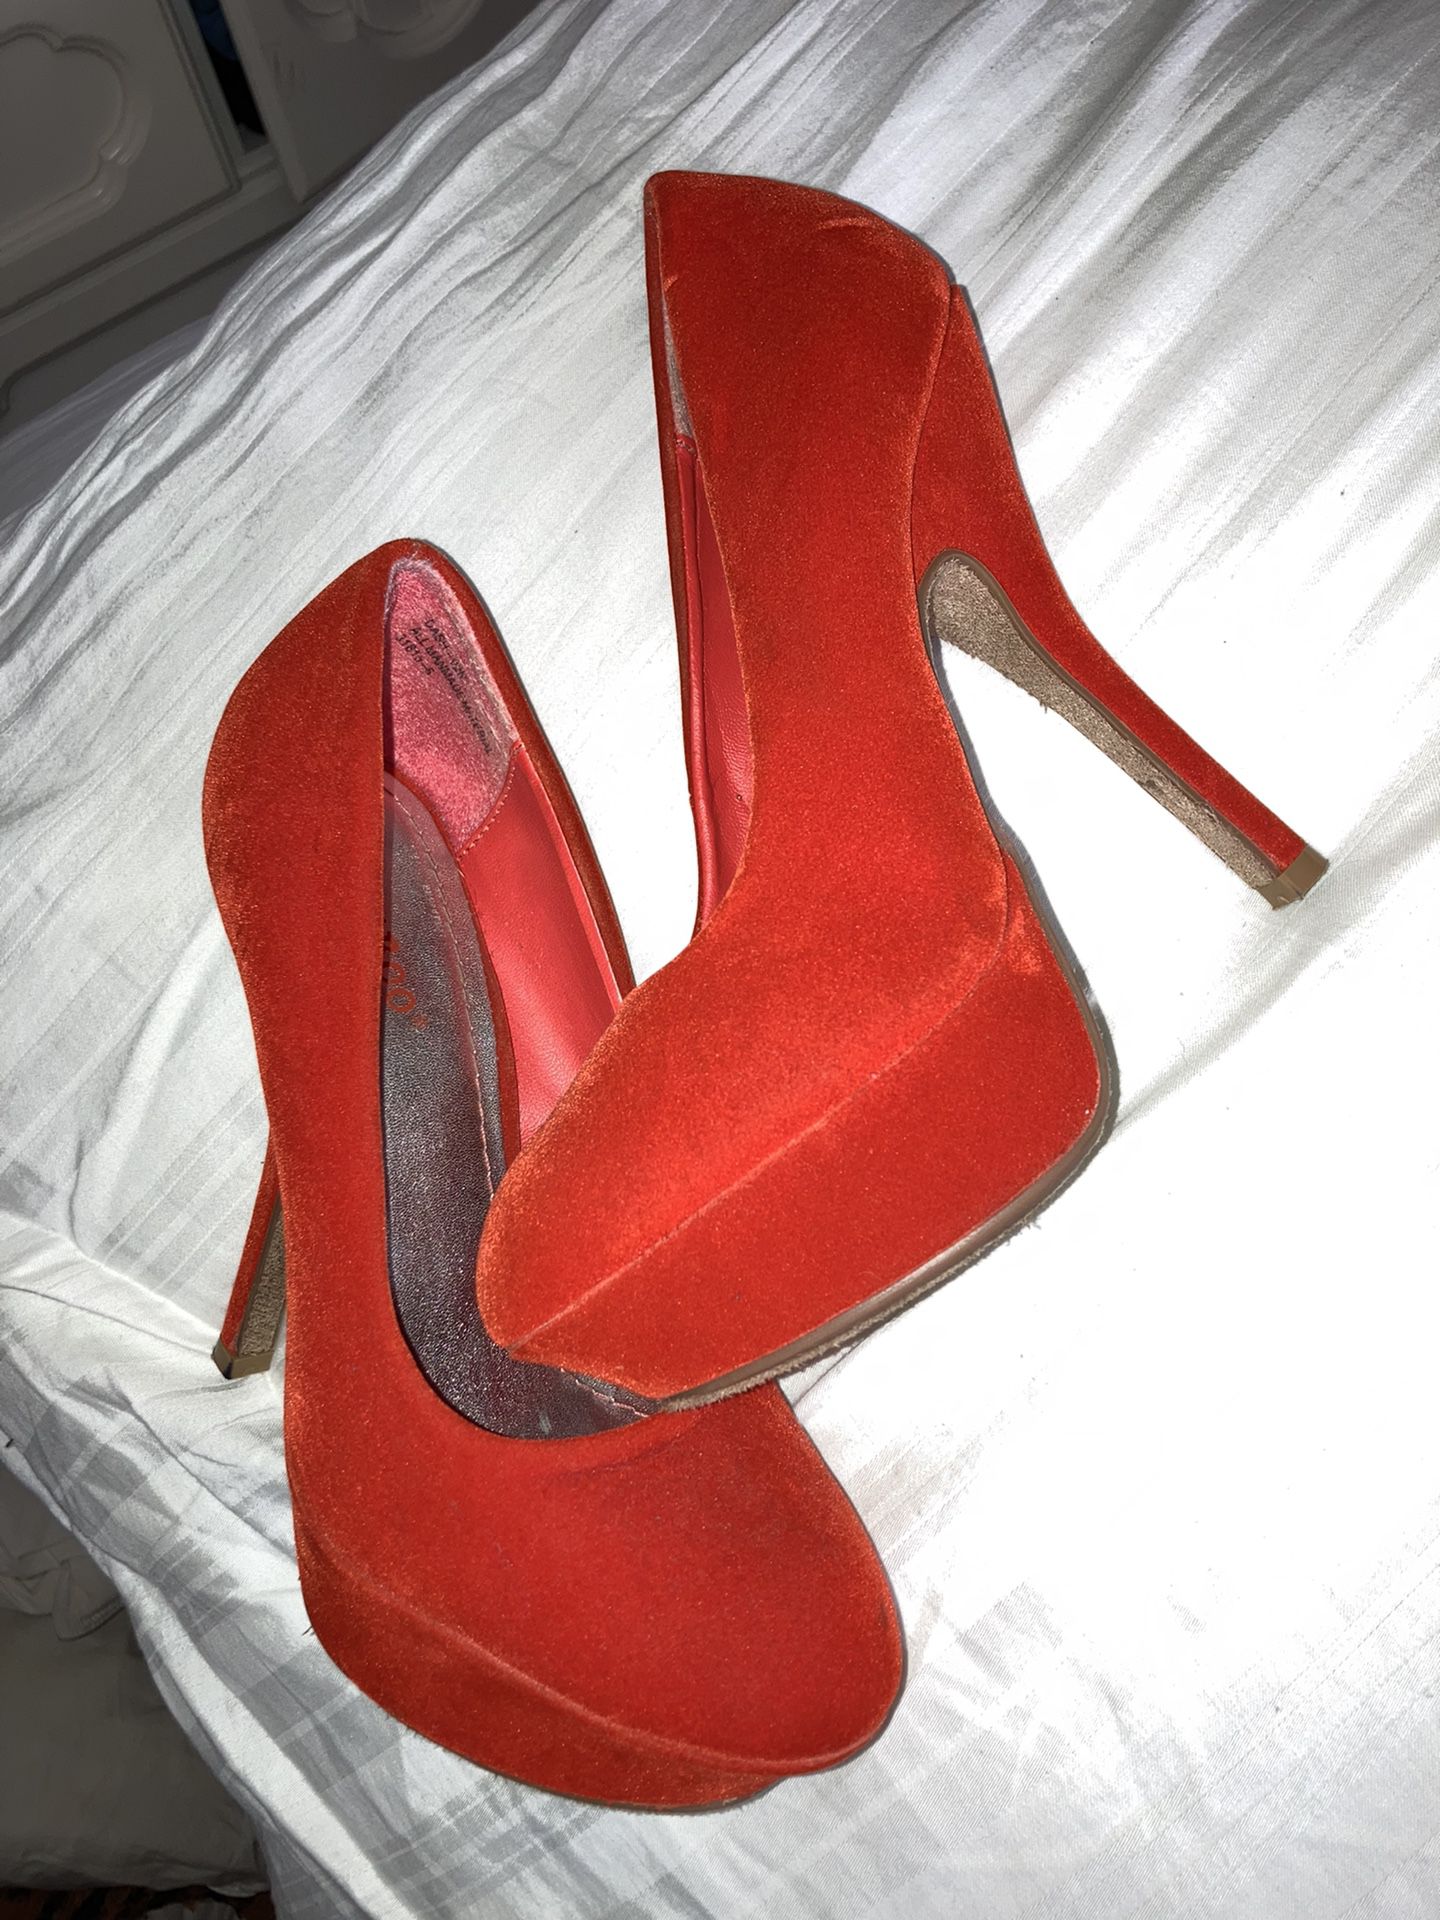 Red/ Orange Heels 